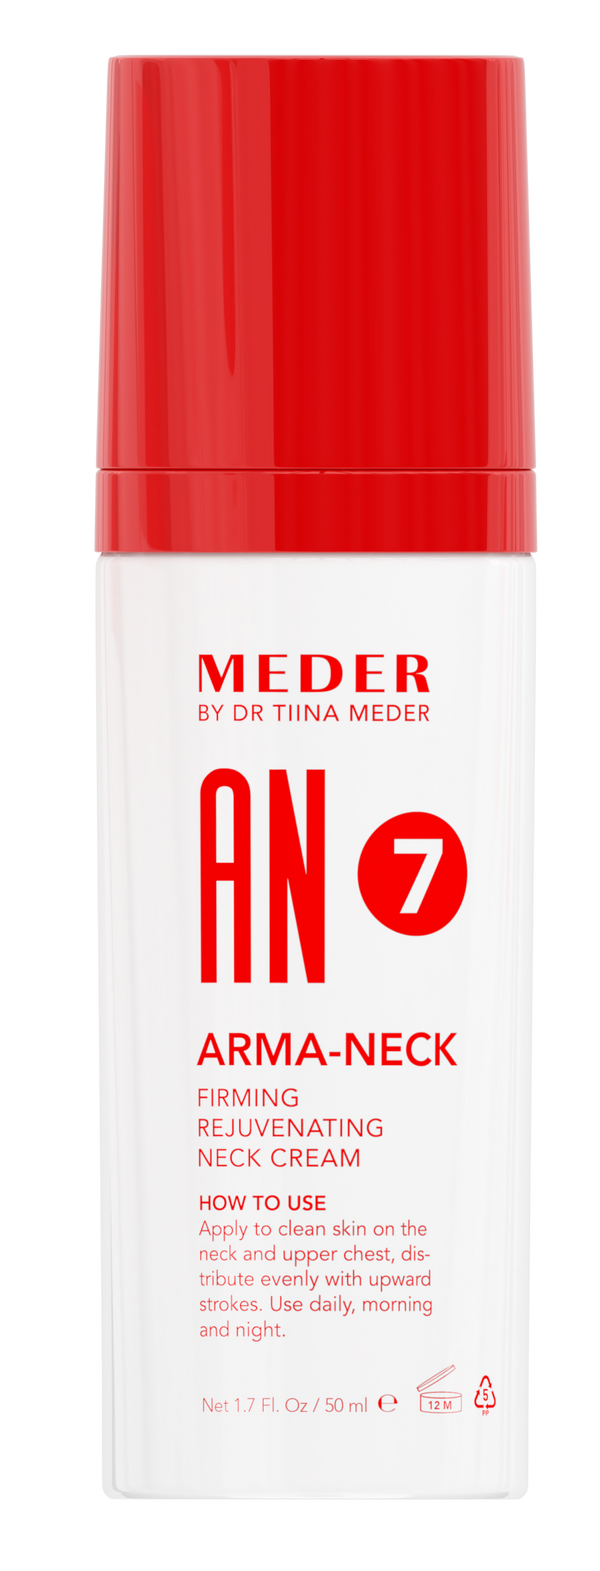 Arma-Neck Cream